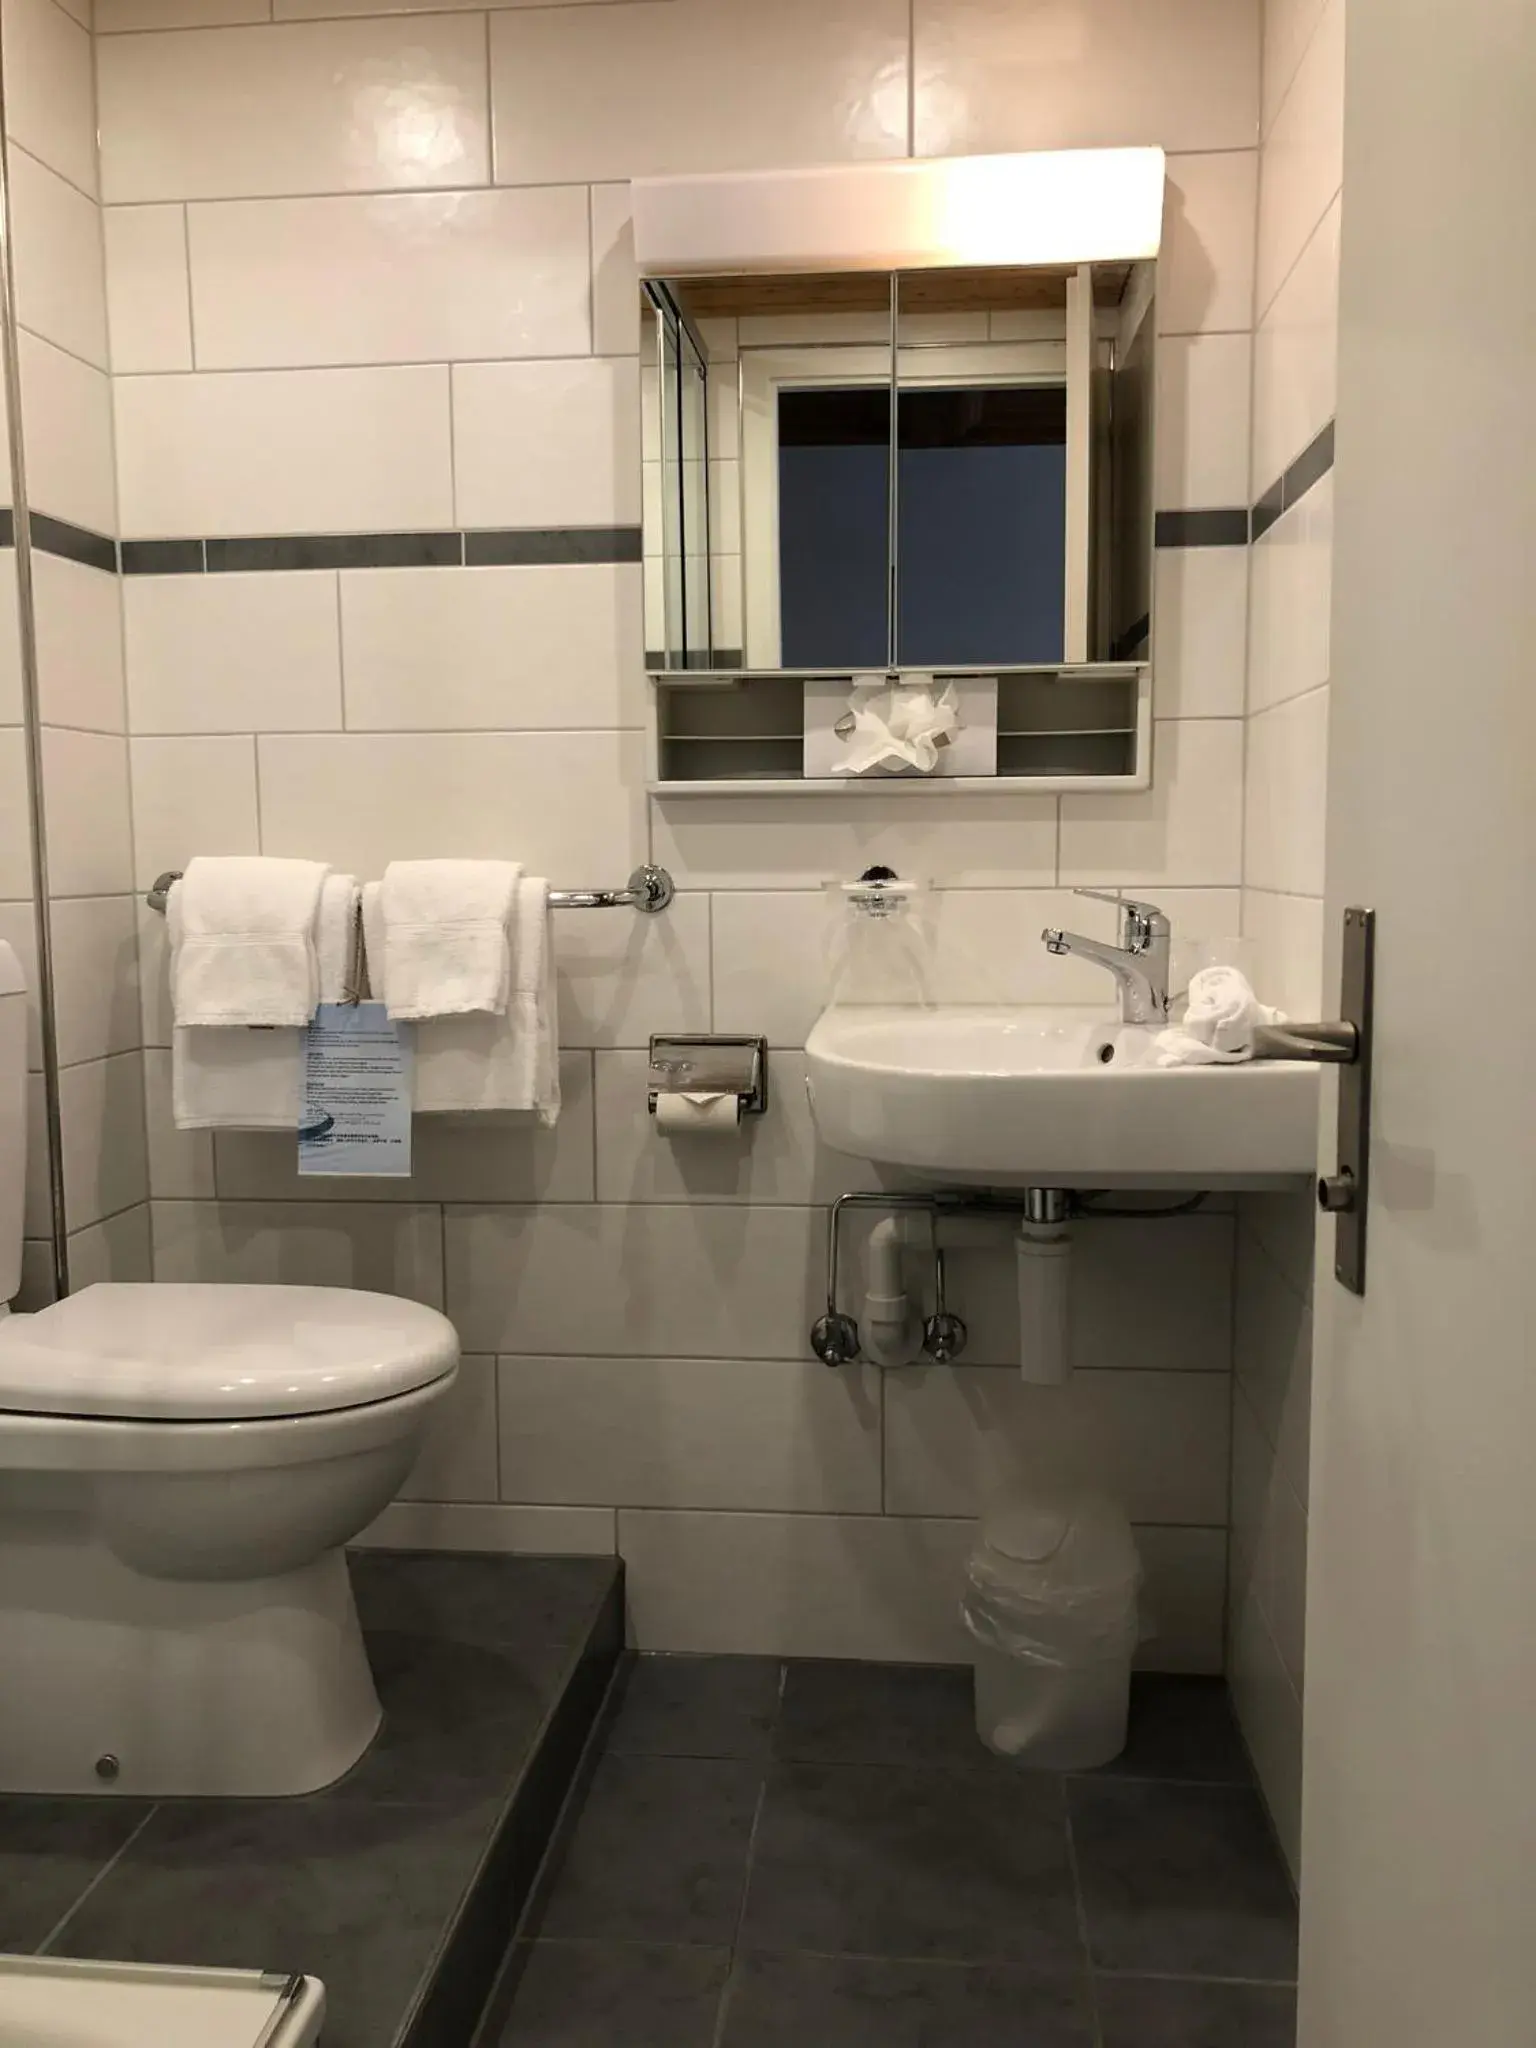 Bathroom in Post Hardermannli